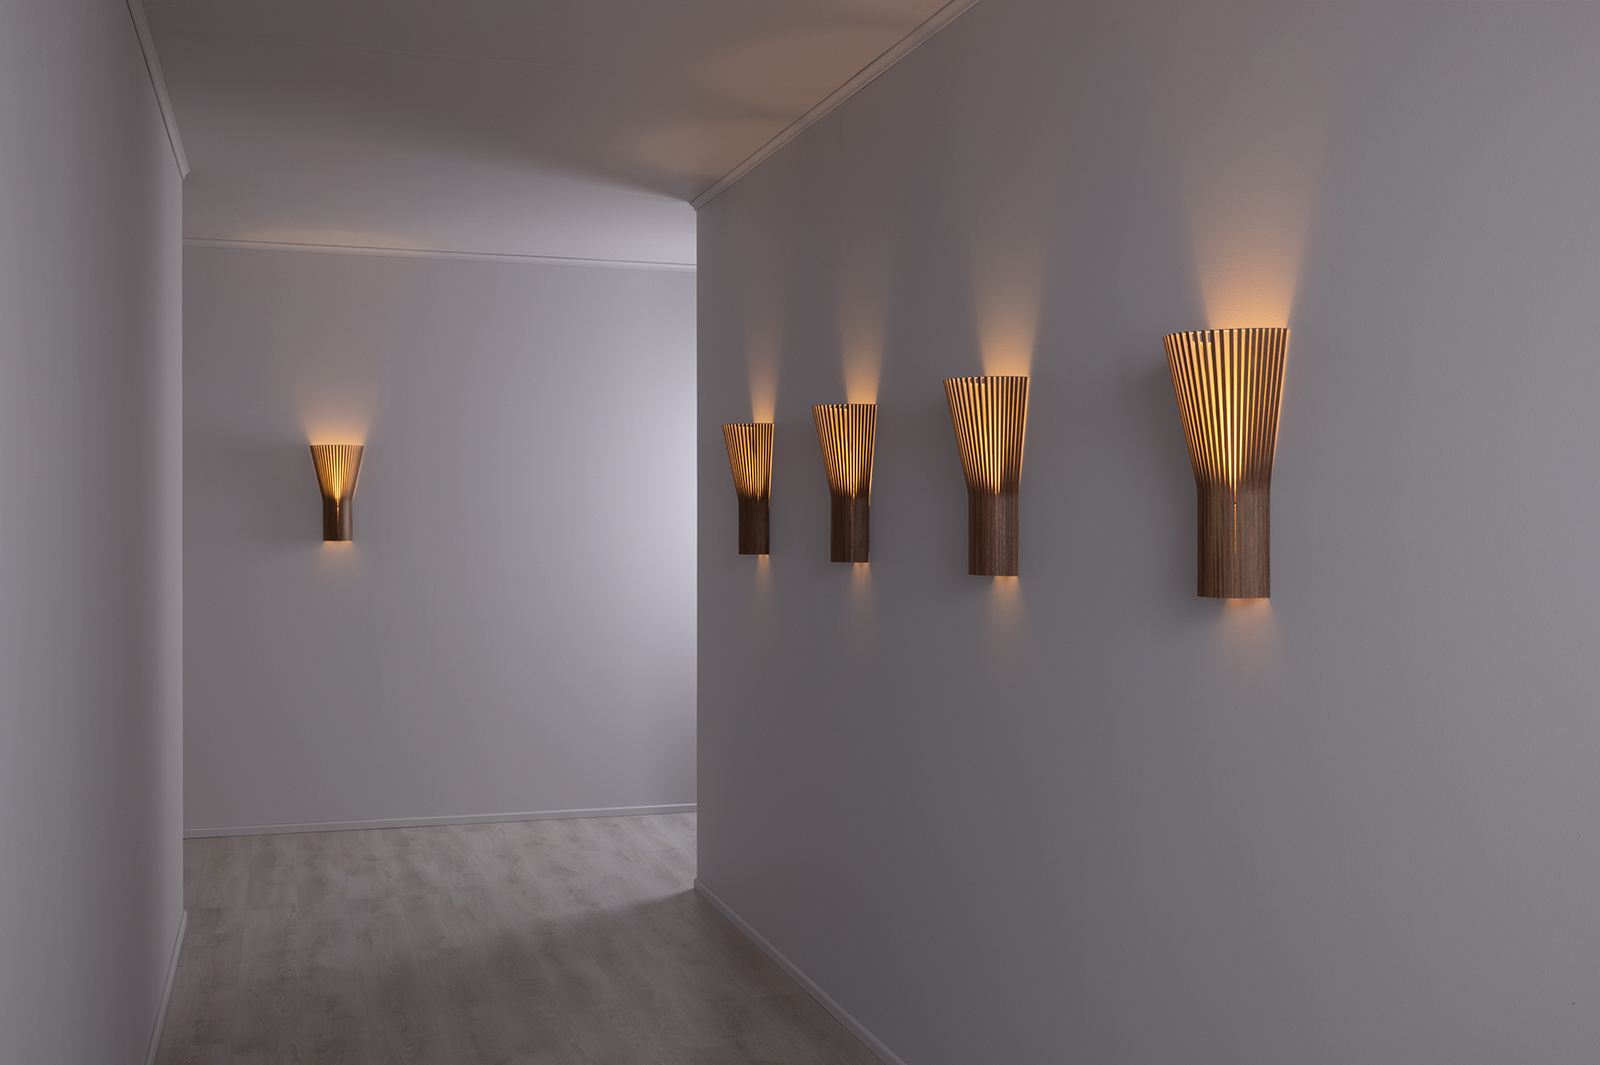 Wall lamps in a corridor.